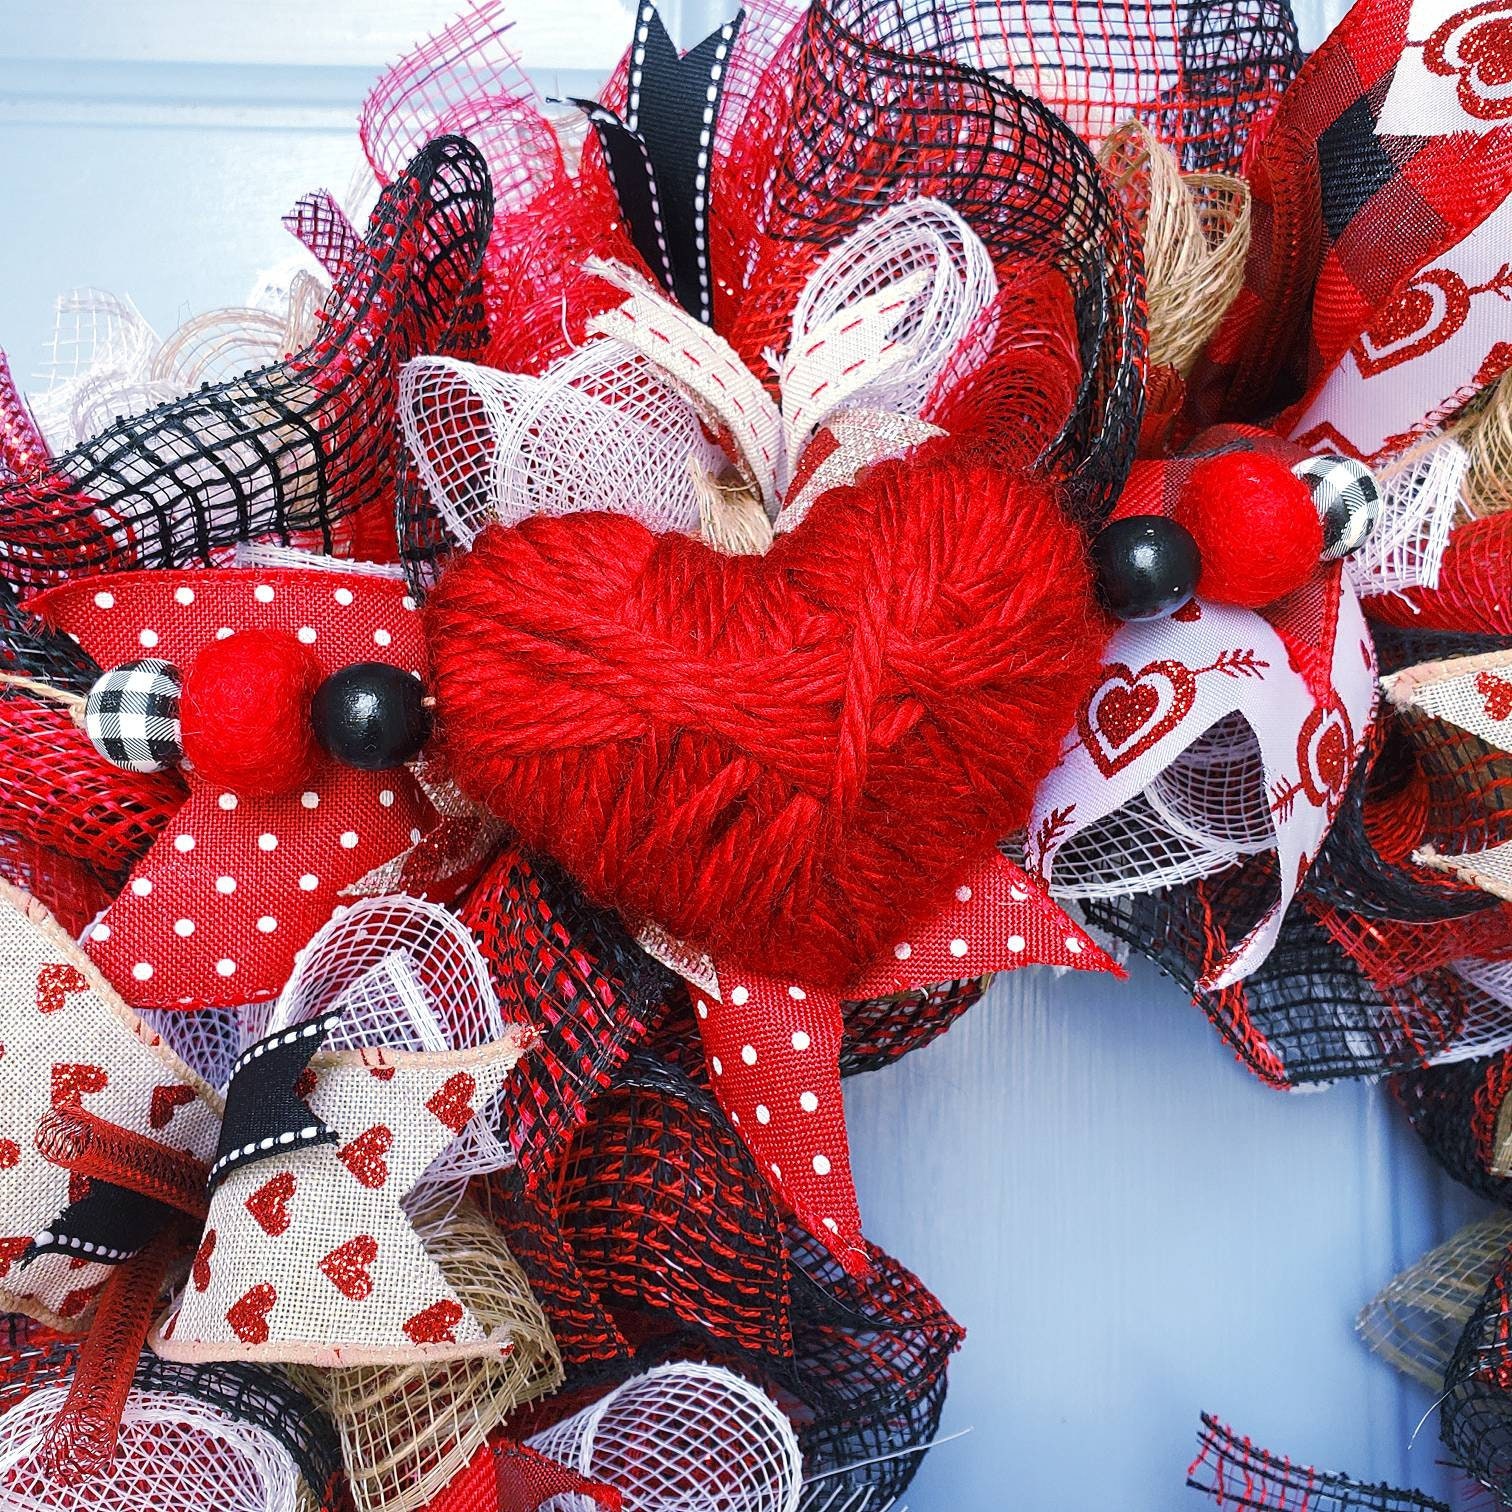 Valentine's Day Wreath for Front Door, Valentine Decor, Black and